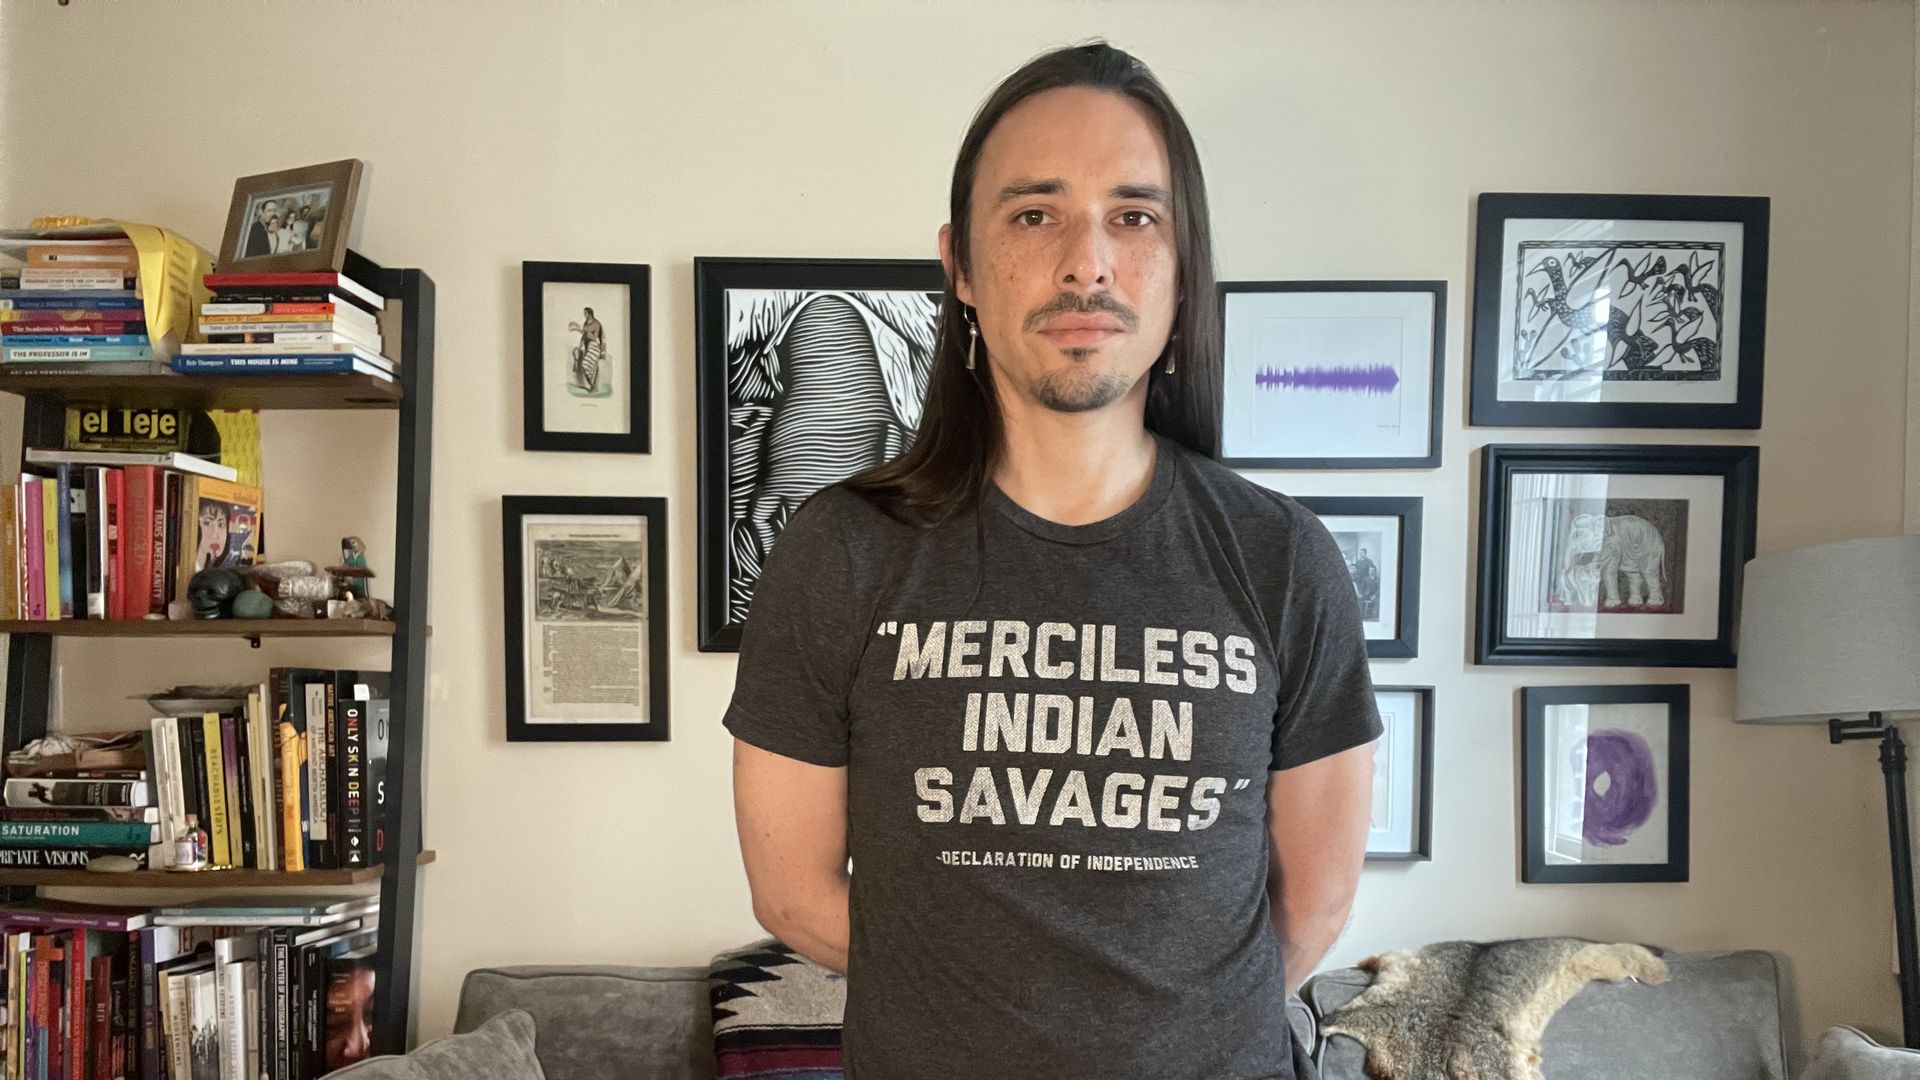 Stony Brook University Hispanic and Literature associate professor Joseph M. Pierce, a citizen of the Cherokee Nation, poses with "Merciless Indian Savages" t-shirt.